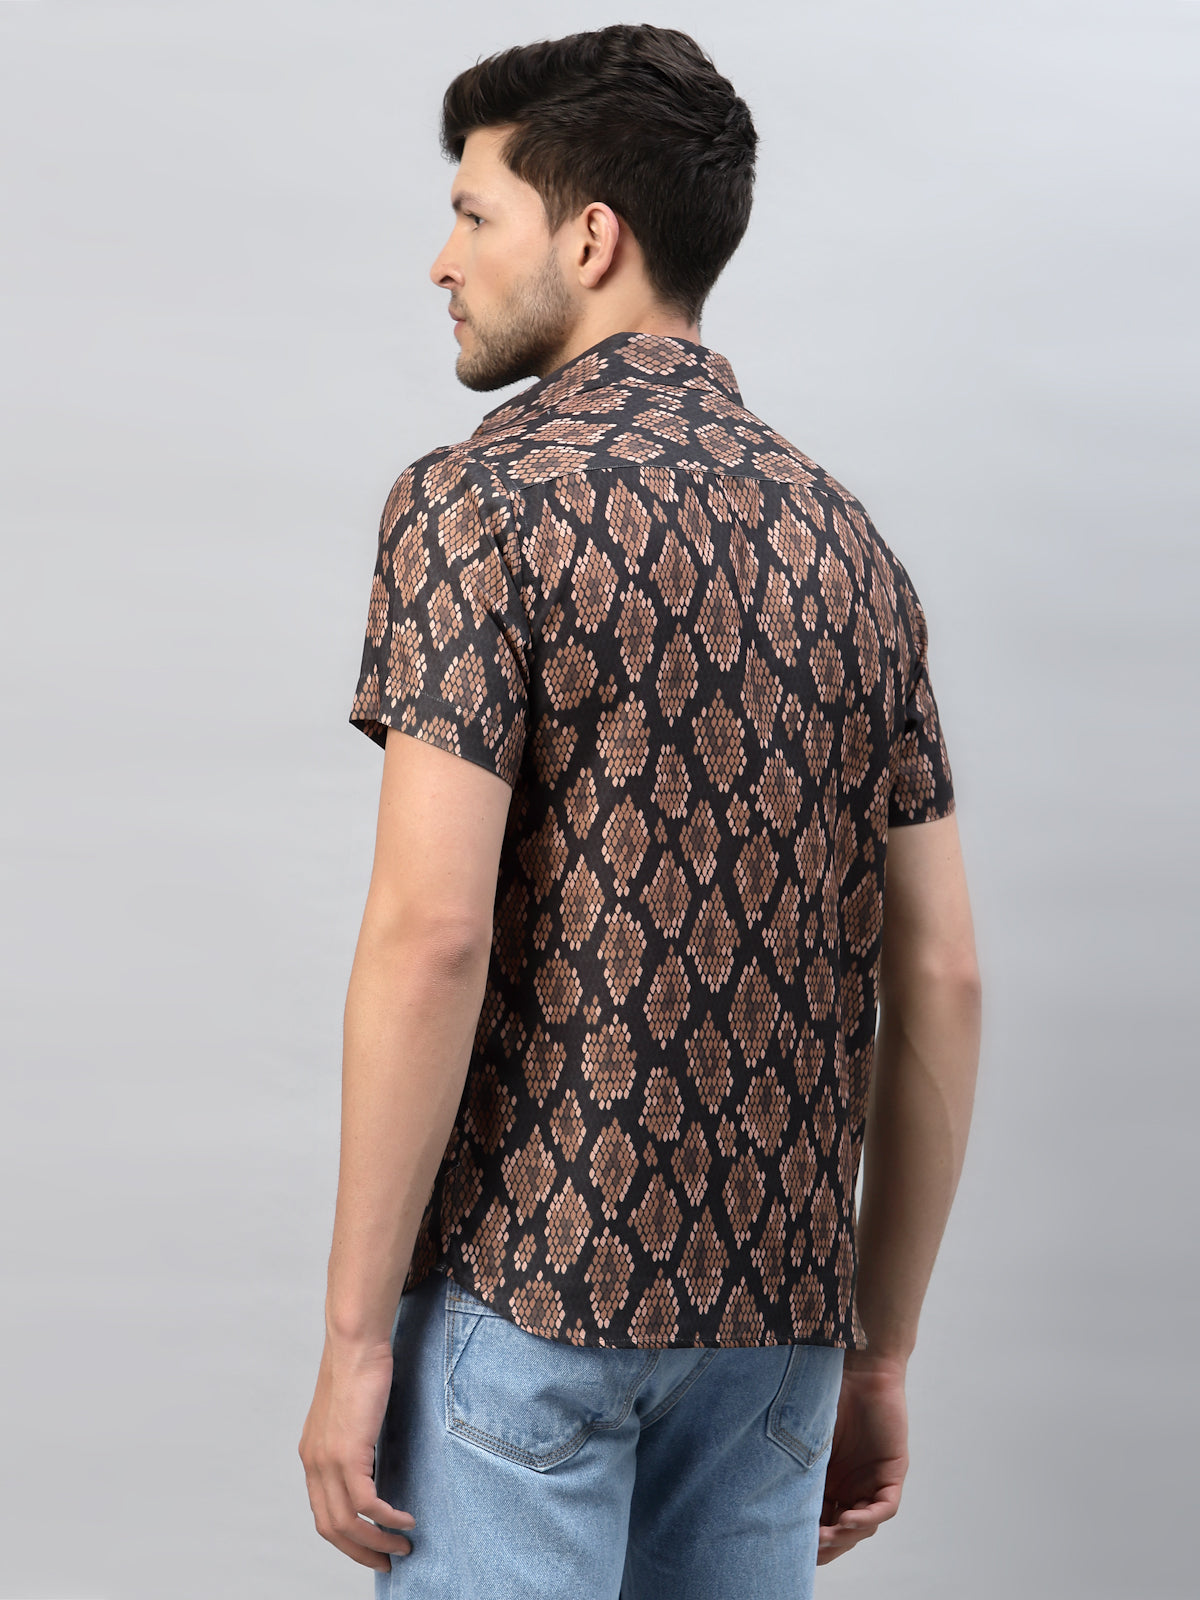 Brown Snake Skin Print Half Sleeve Shirt By Gavin Paris